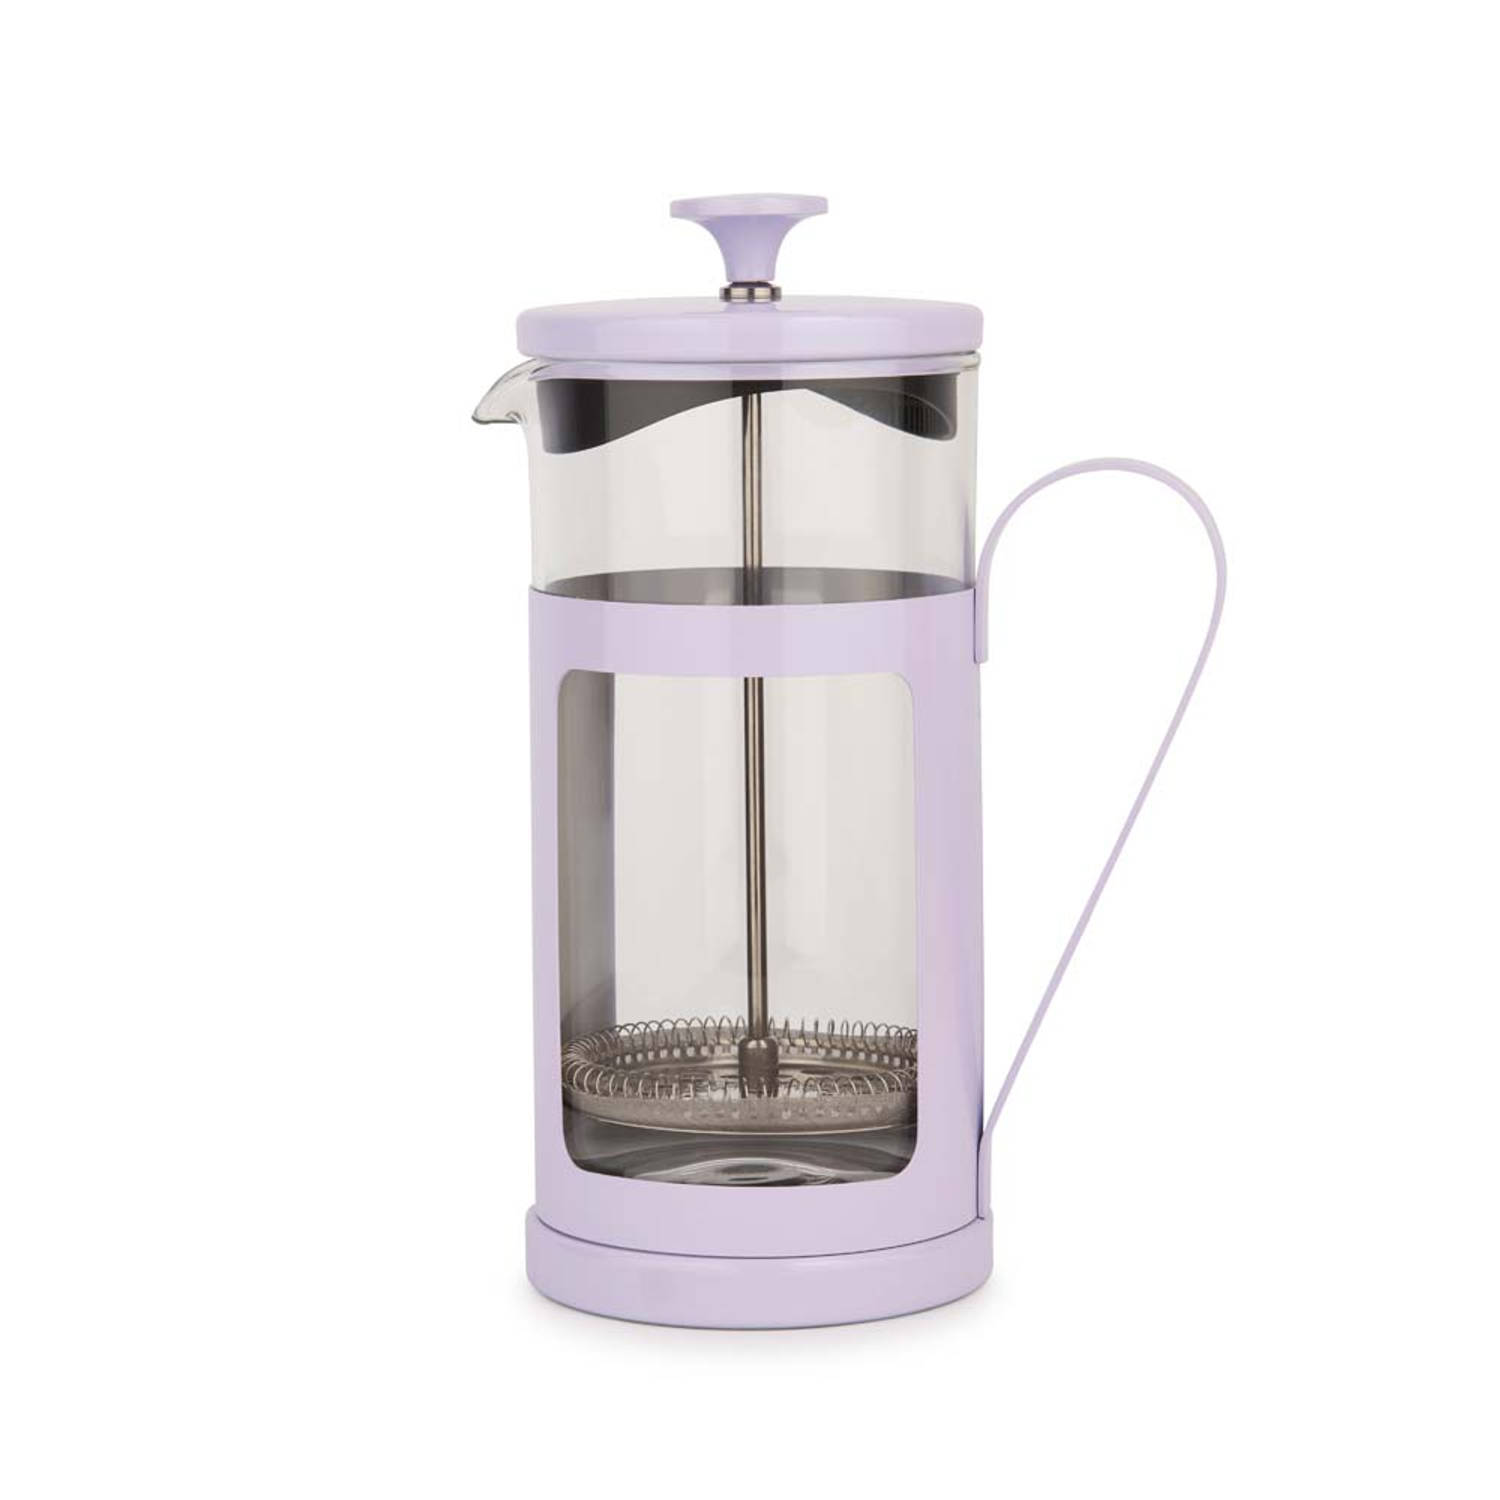 Cafetiere - 8 cups - 1 Liter - Lavendel - Voor Thee & Koffie - La Cafetiere | Monaco